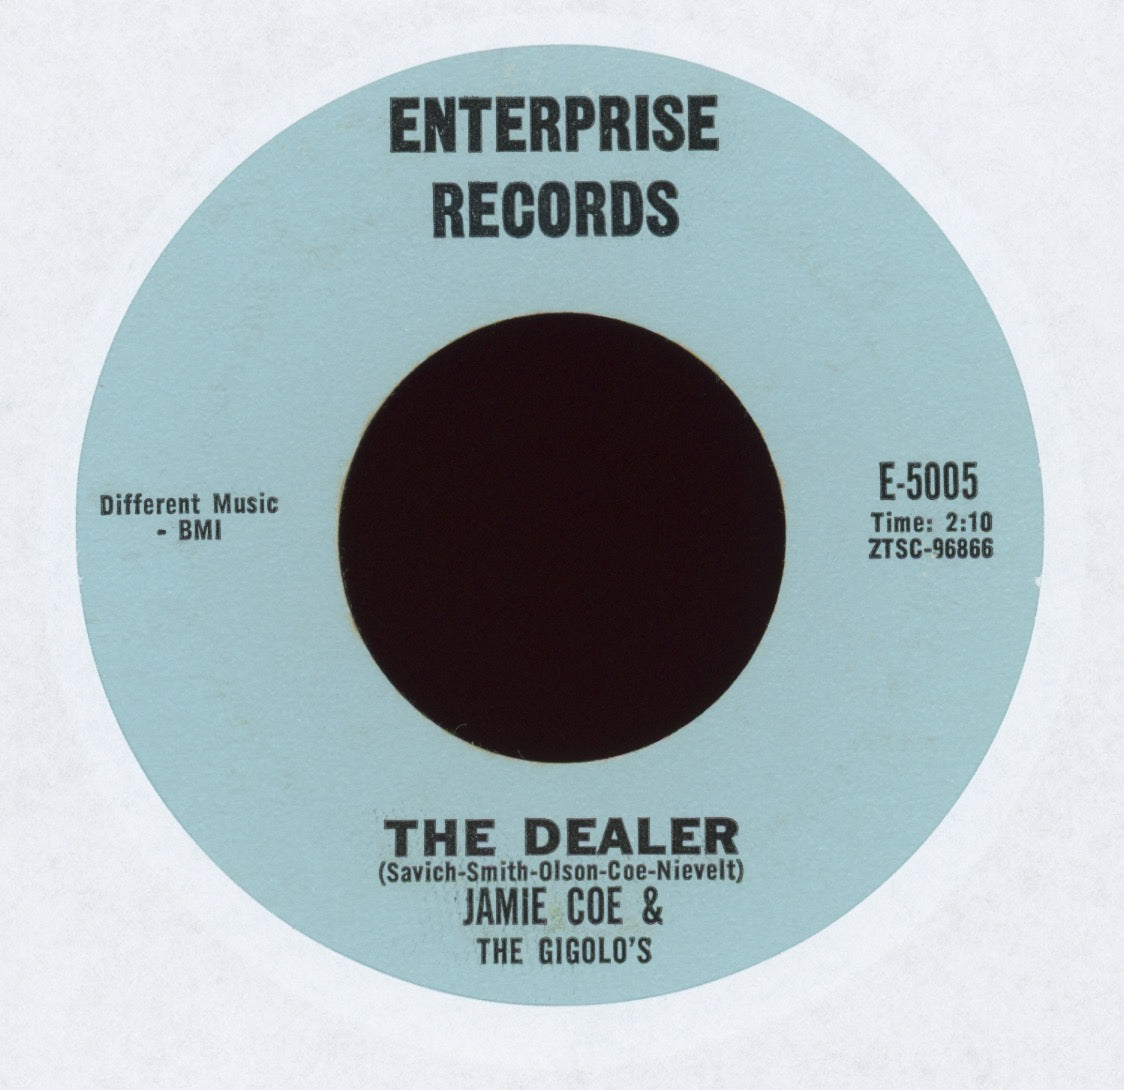 Jamie Coe & The Gigolos - The Dealer on Enterprise